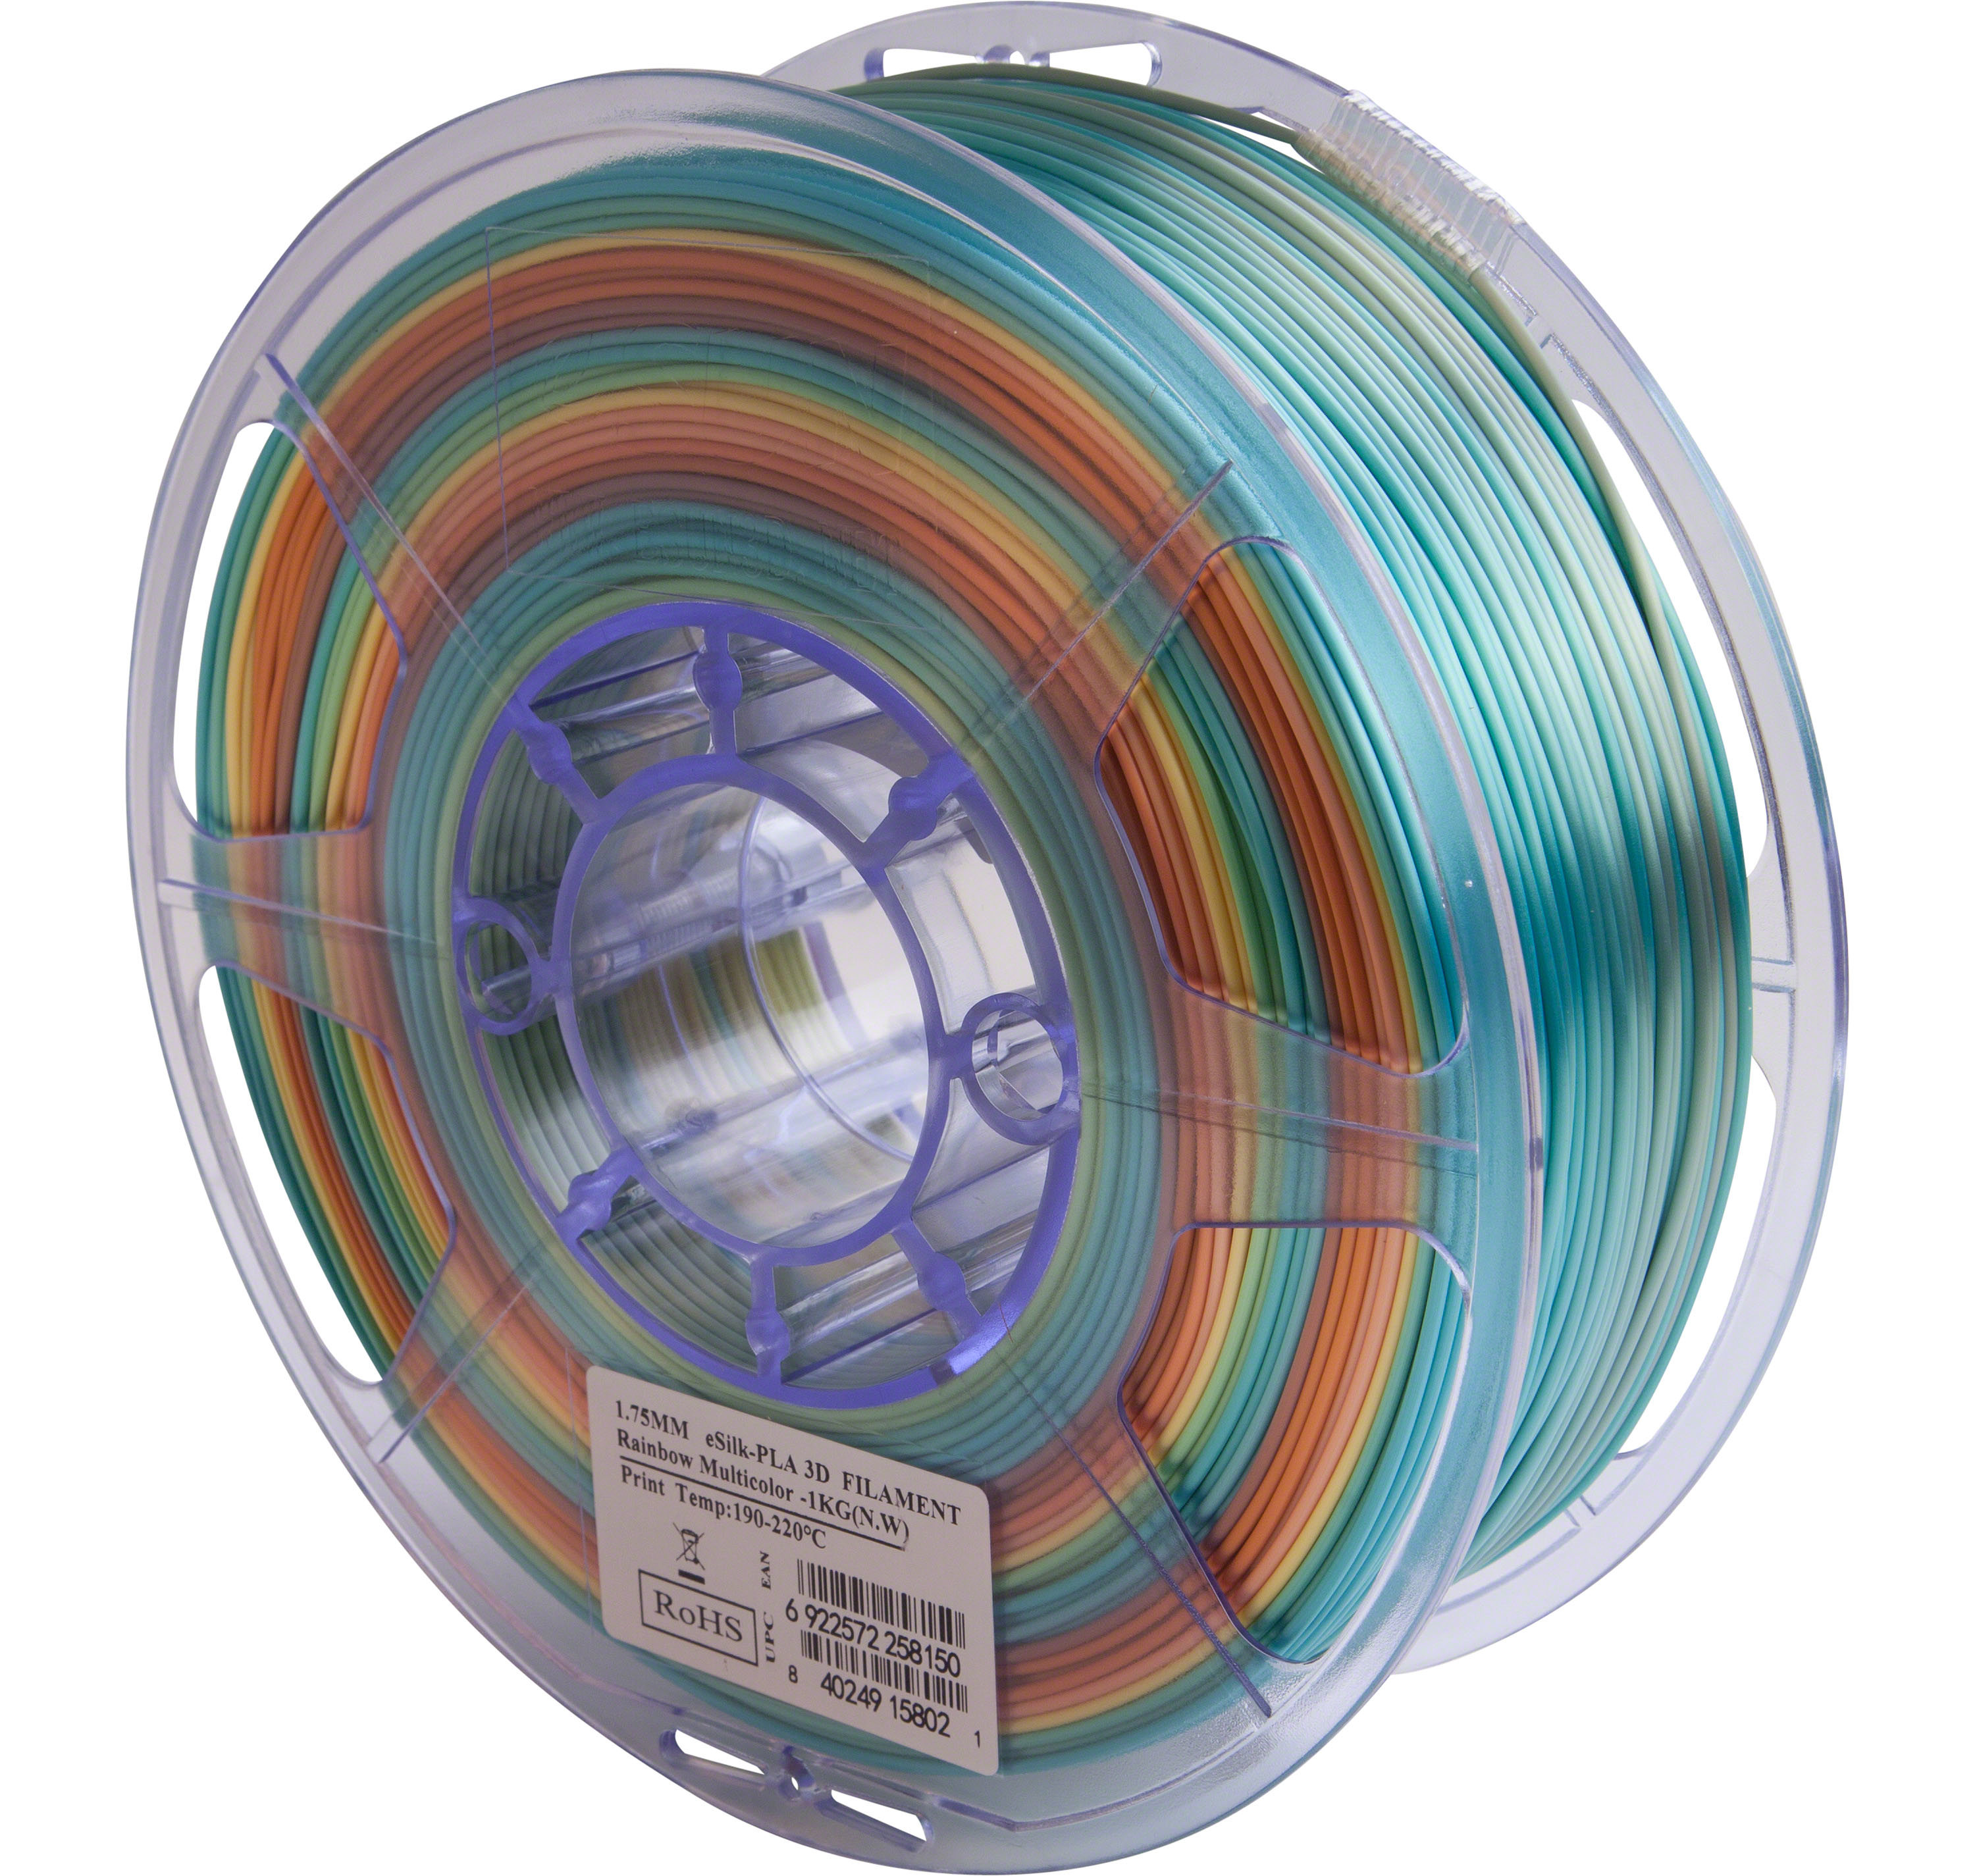 eSUN 3D Printer Silk PLA Rainbow Filament 1.75mm 1KG Multi-color